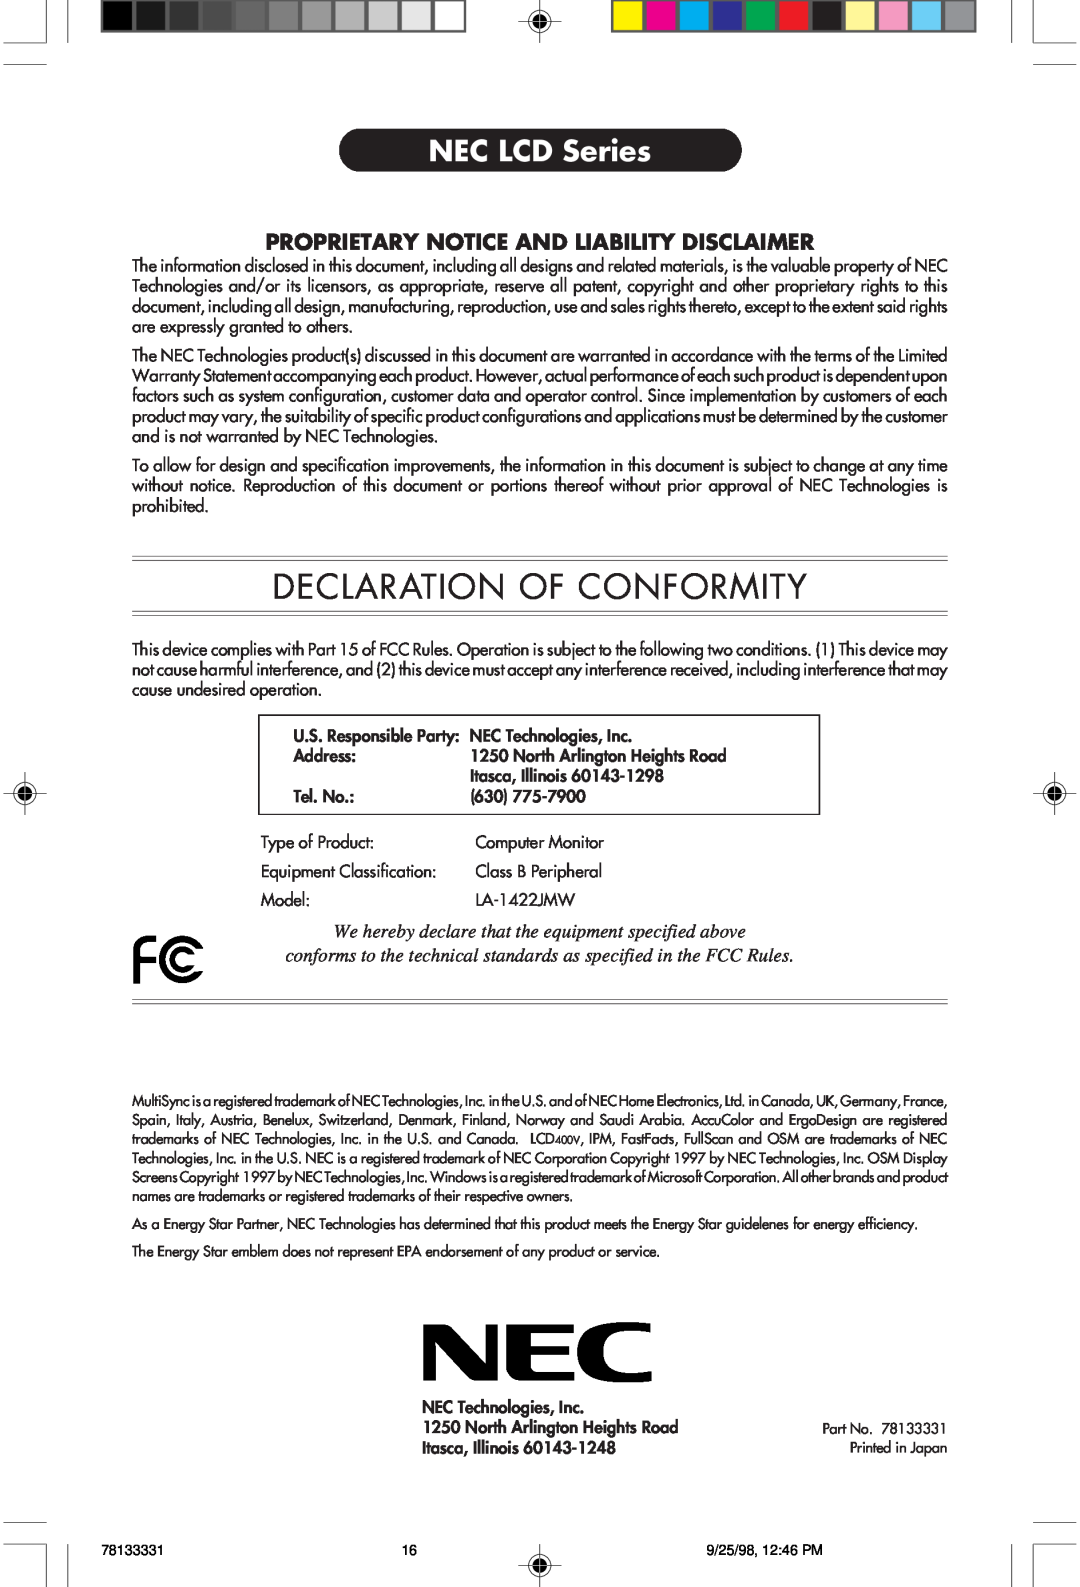 NEC LA-1422JMW user manual NEC LCD Series, Declaration Of Conformity, Proprietary Notice And Liability Disclaimer 